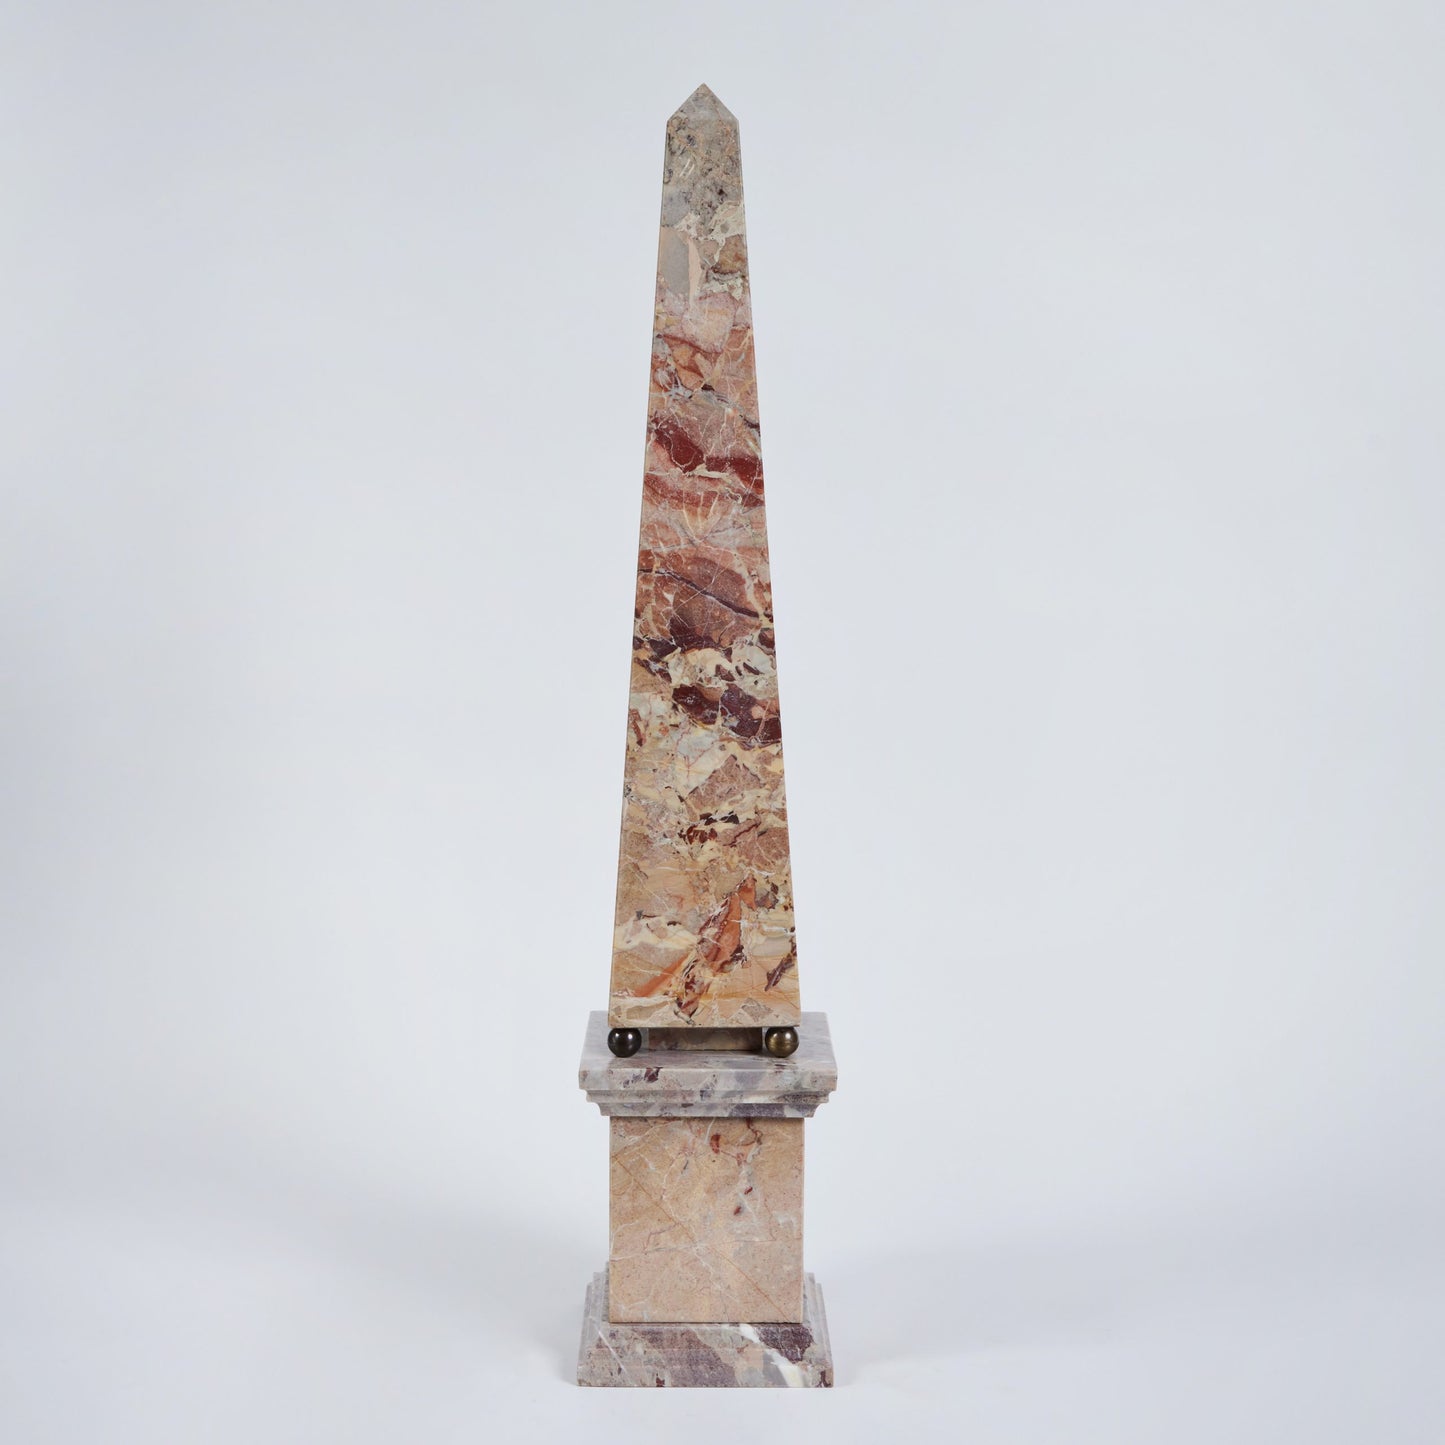 Pair of Large Italian Marble Obelisks